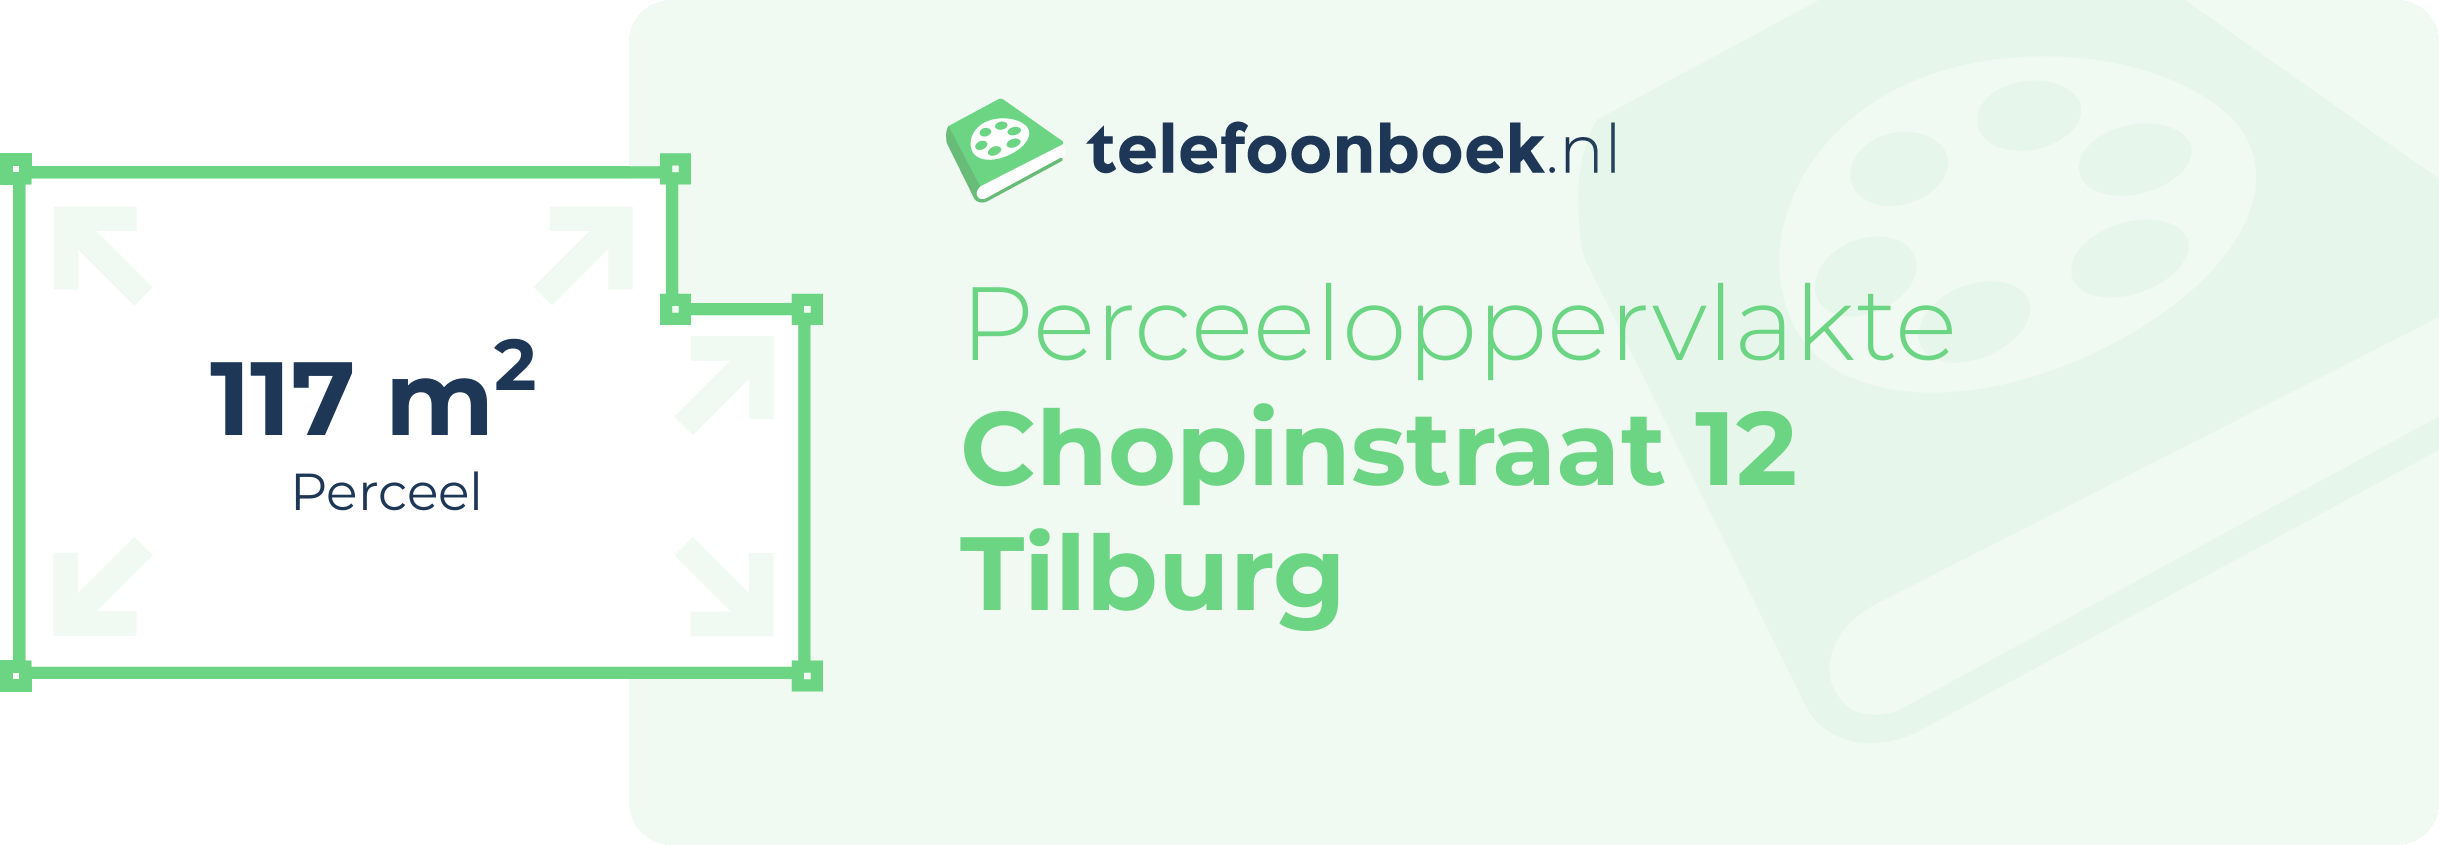 Perceeloppervlakte Chopinstraat 12 Tilburg